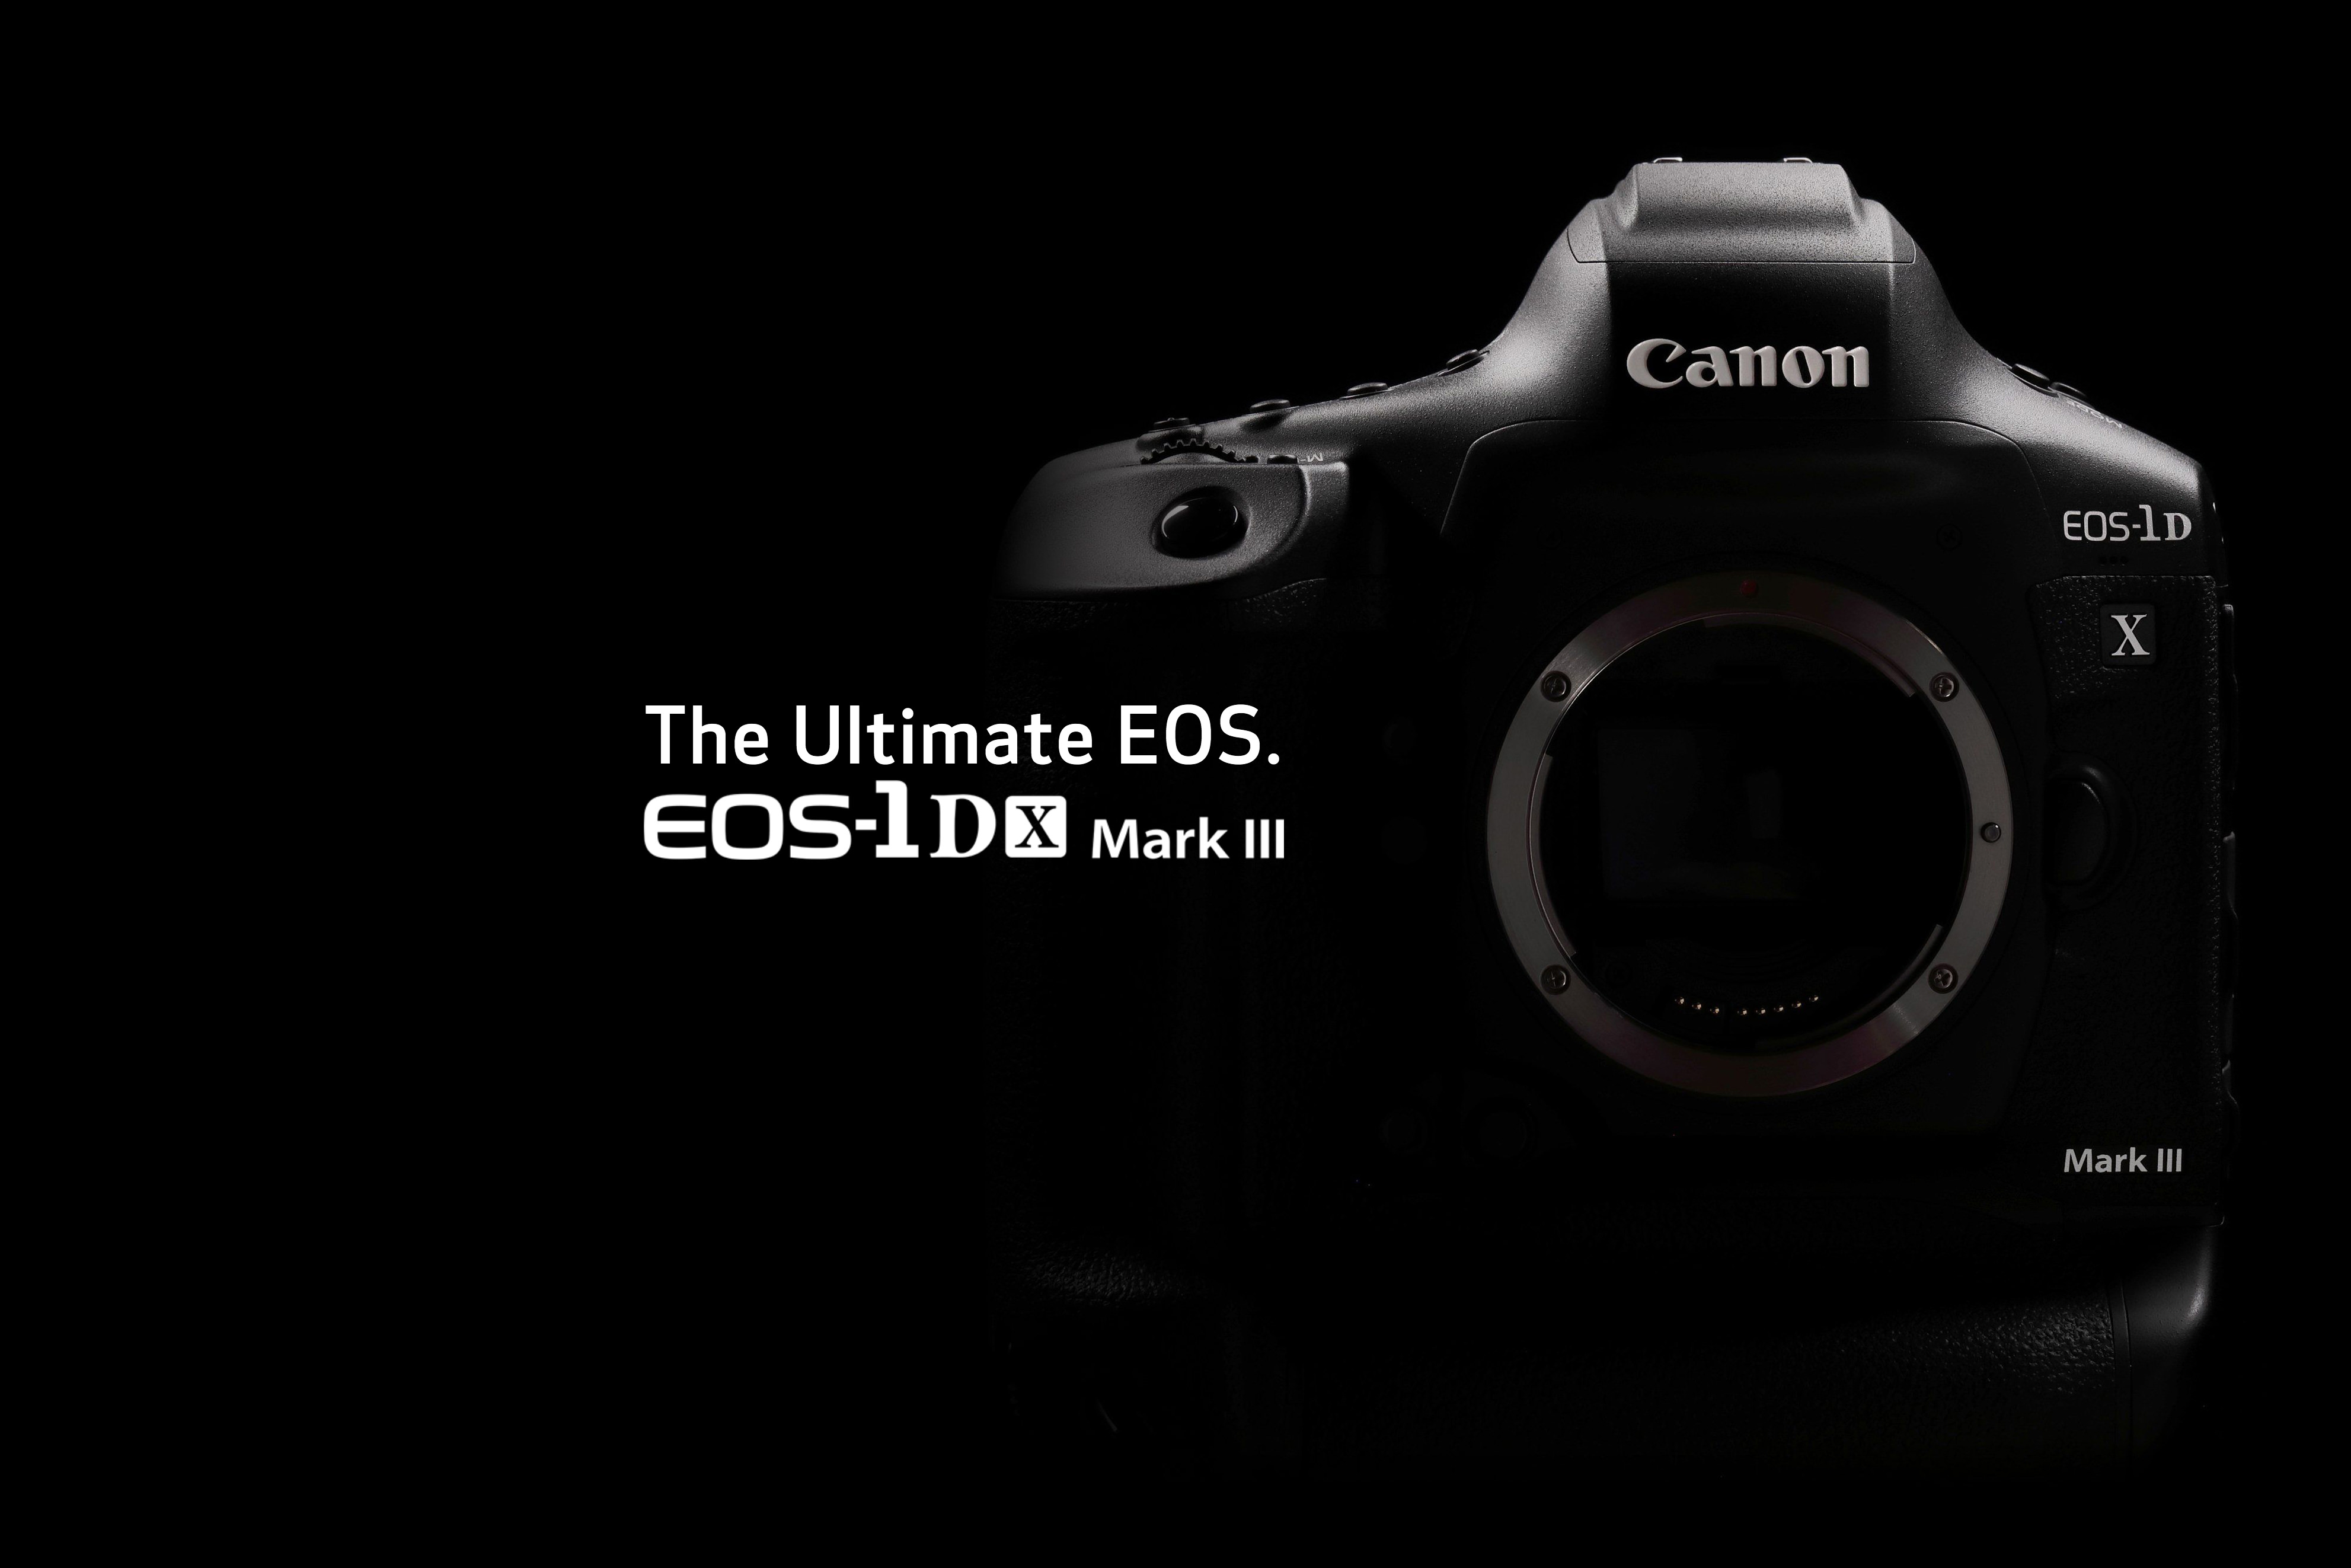 Canon Announced The Development Of The Eos 1d X Mark Iii Dslr Camera Exibart Street